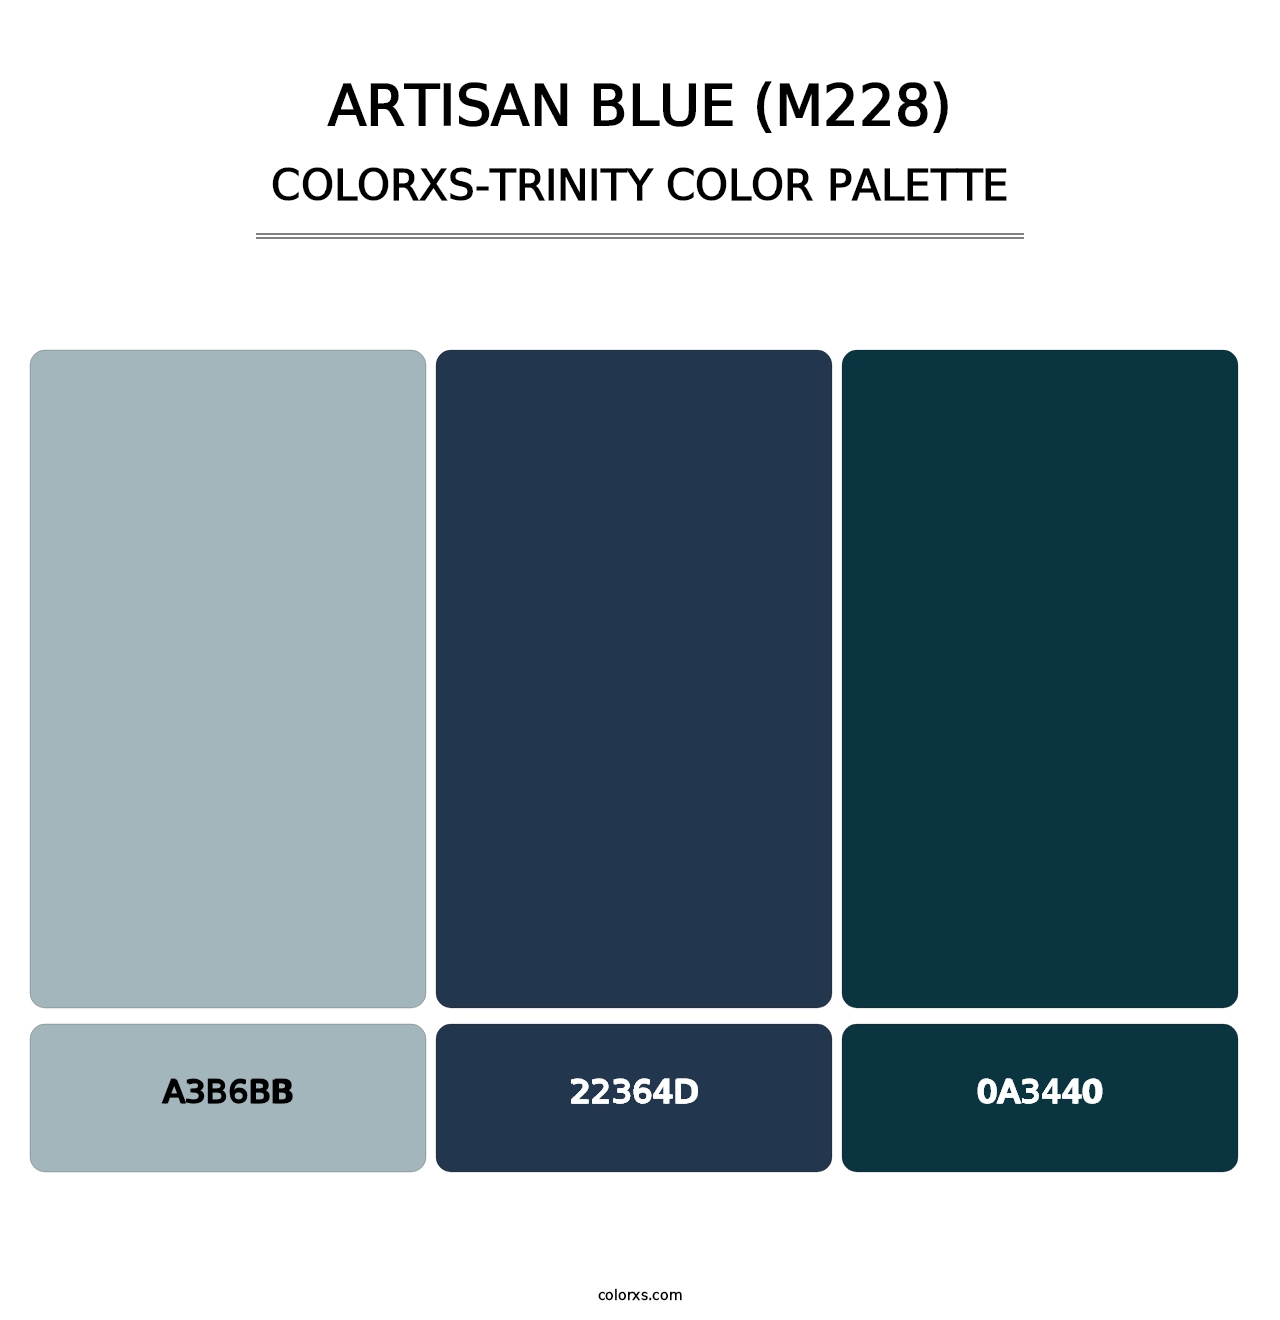 Artisan Blue (M228) - Colorxs Trinity Palette